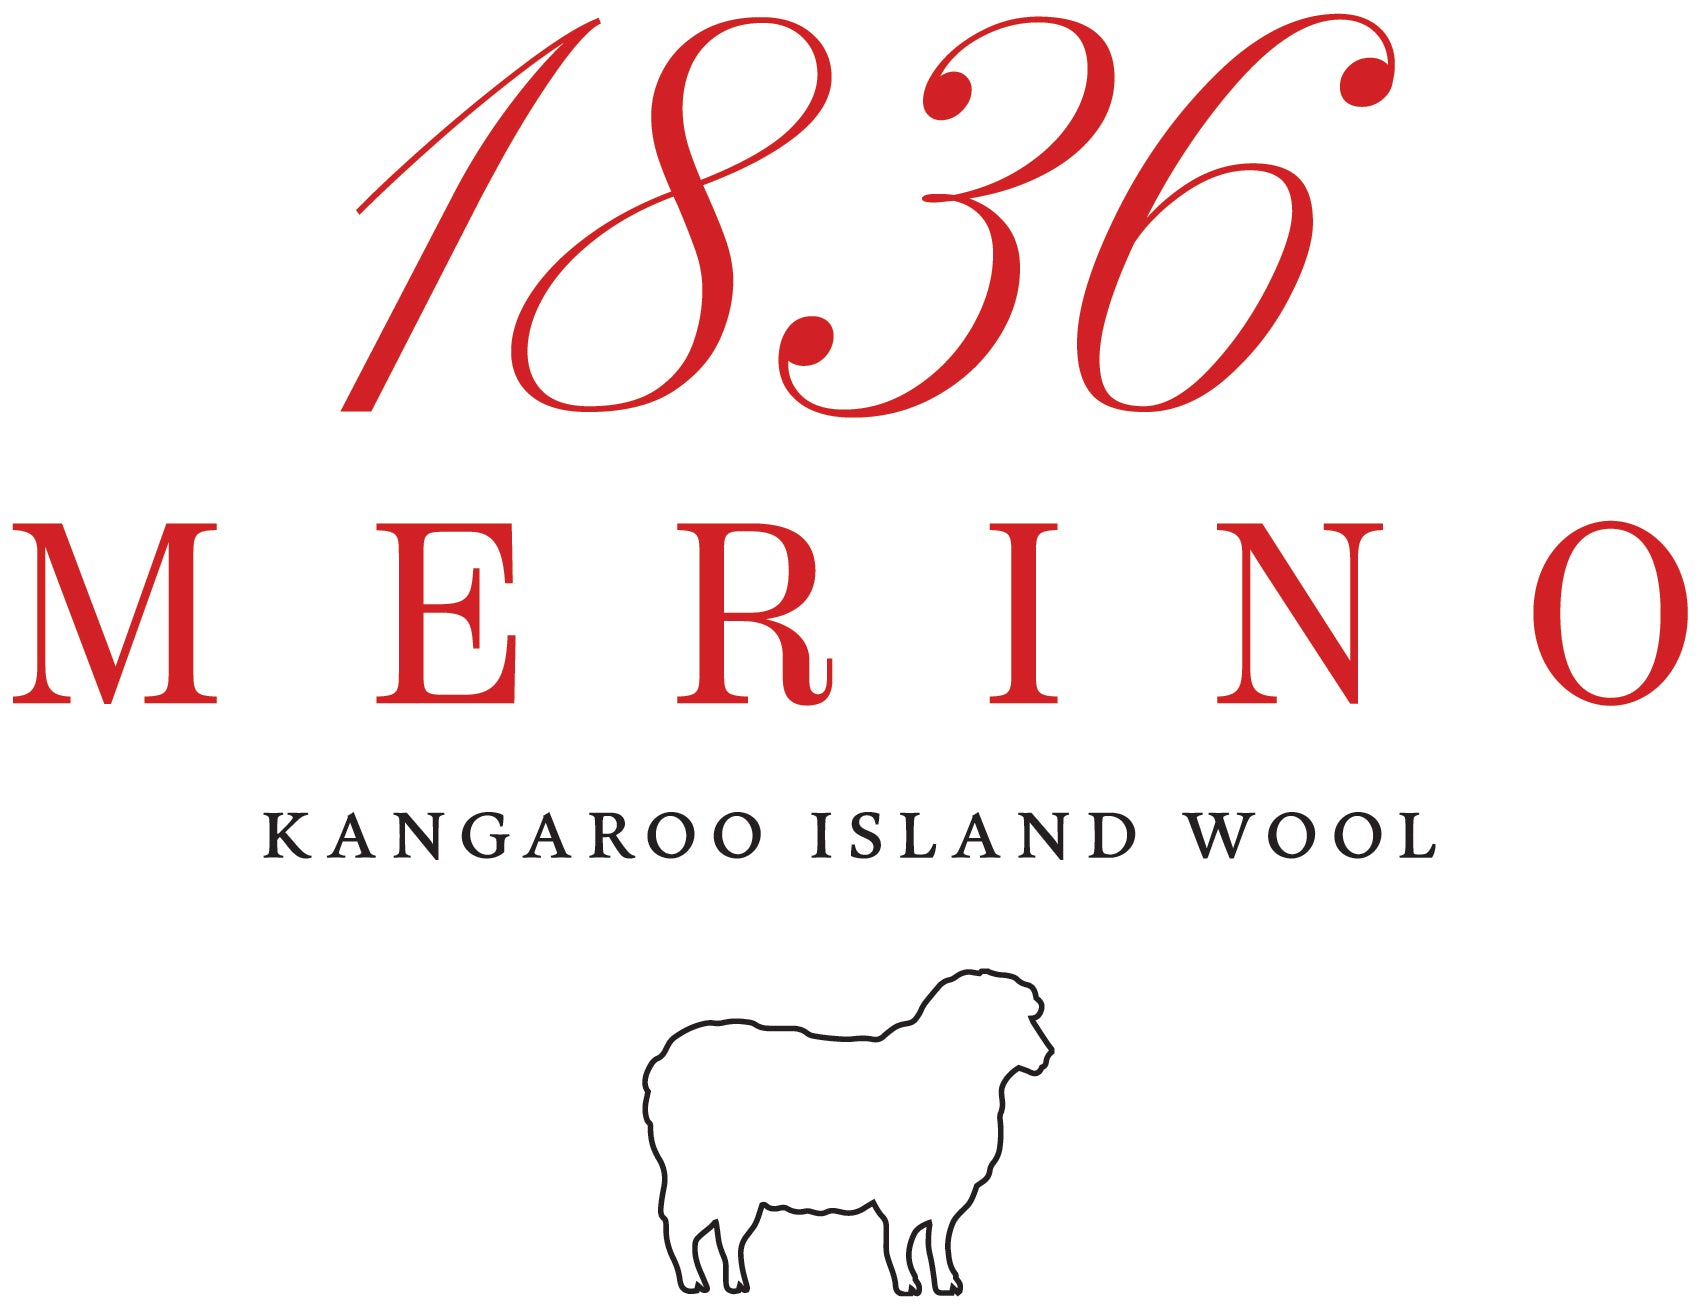 1836 Merino wool quilt logo | Kelly Windsor Australia